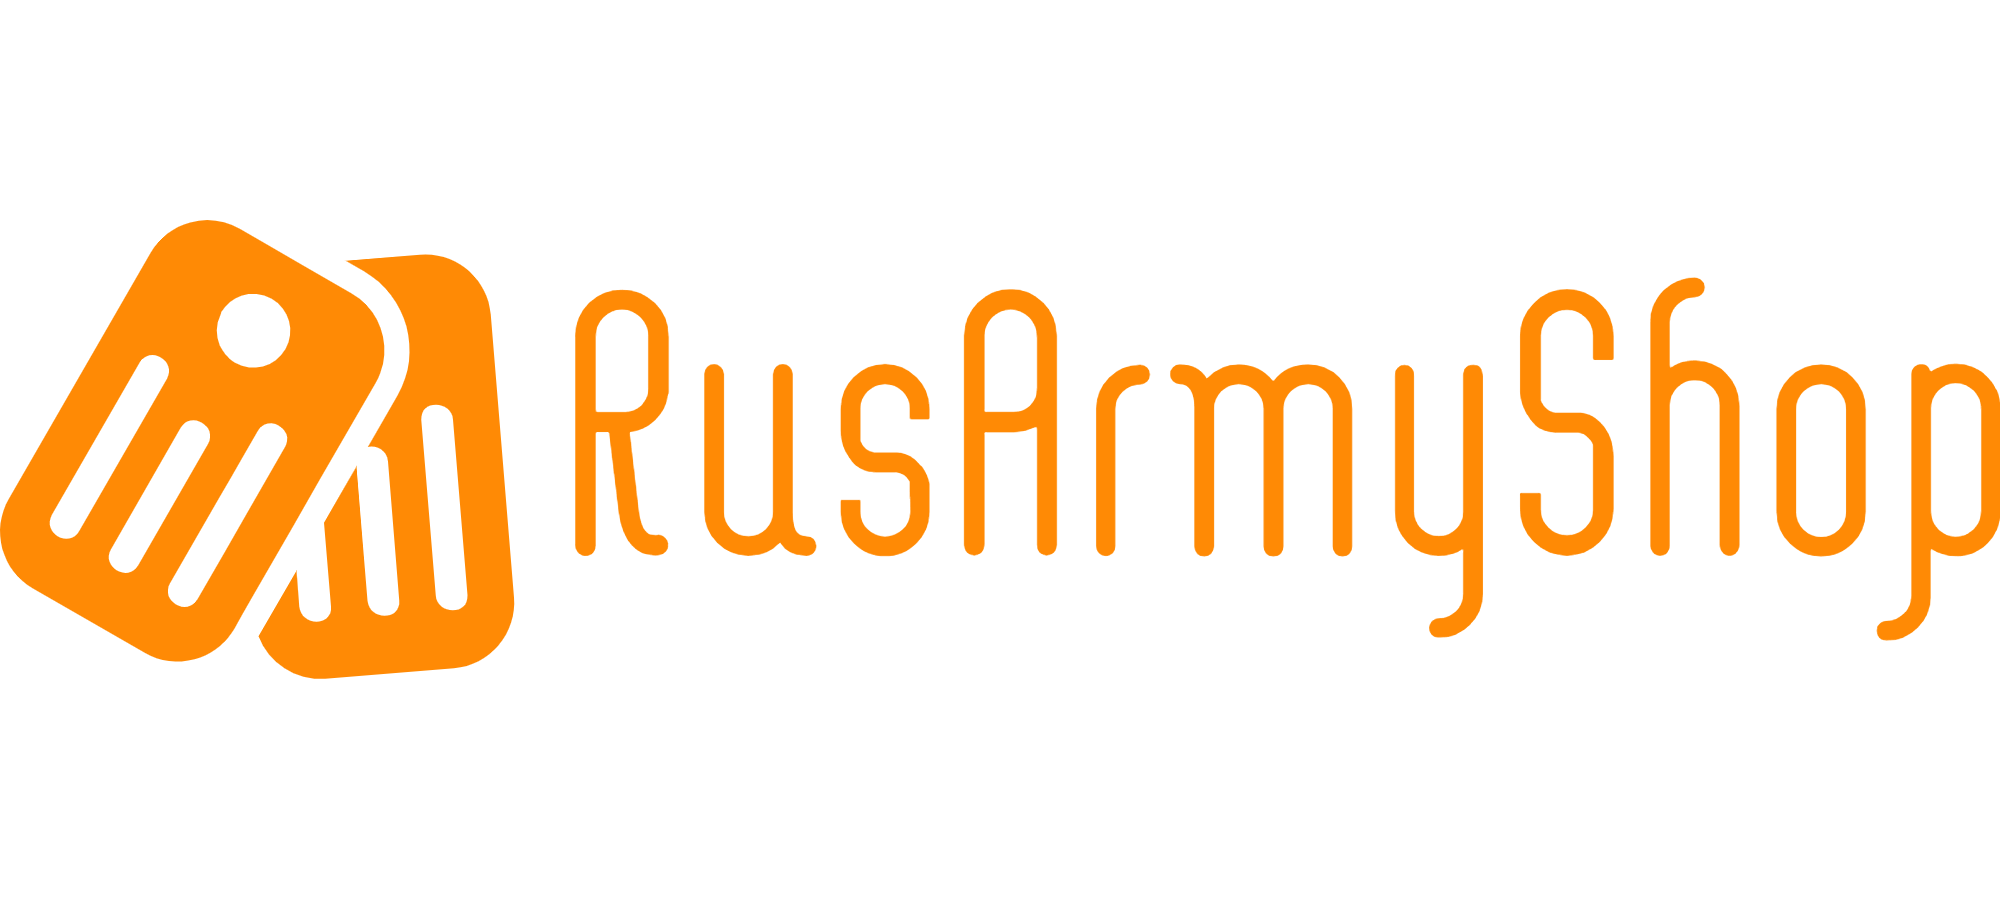 Rusarmyshop